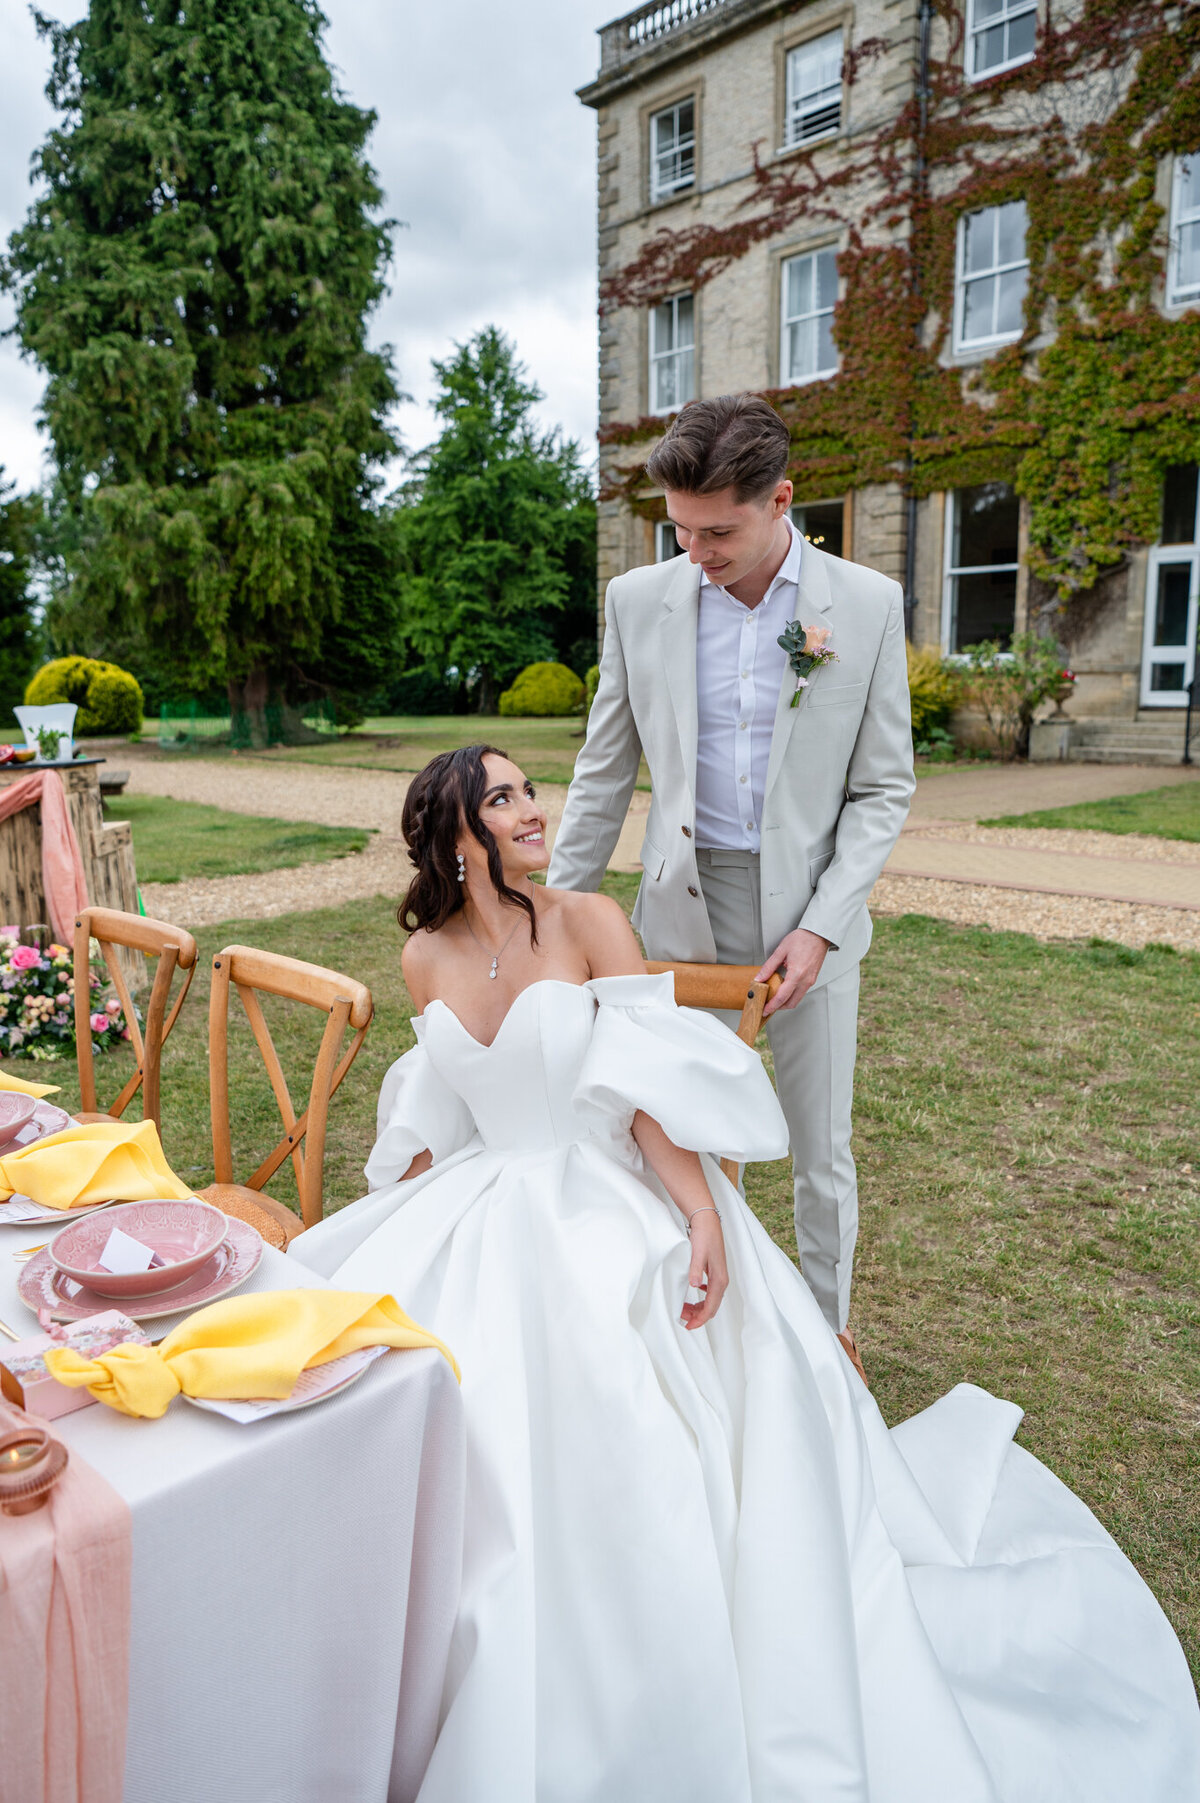 Chloe Bolam - UK Wedding and Engagment Photographer - Swanbourne House Wedding Venue Milton Keynes - Destination Wedding in the UK - 15